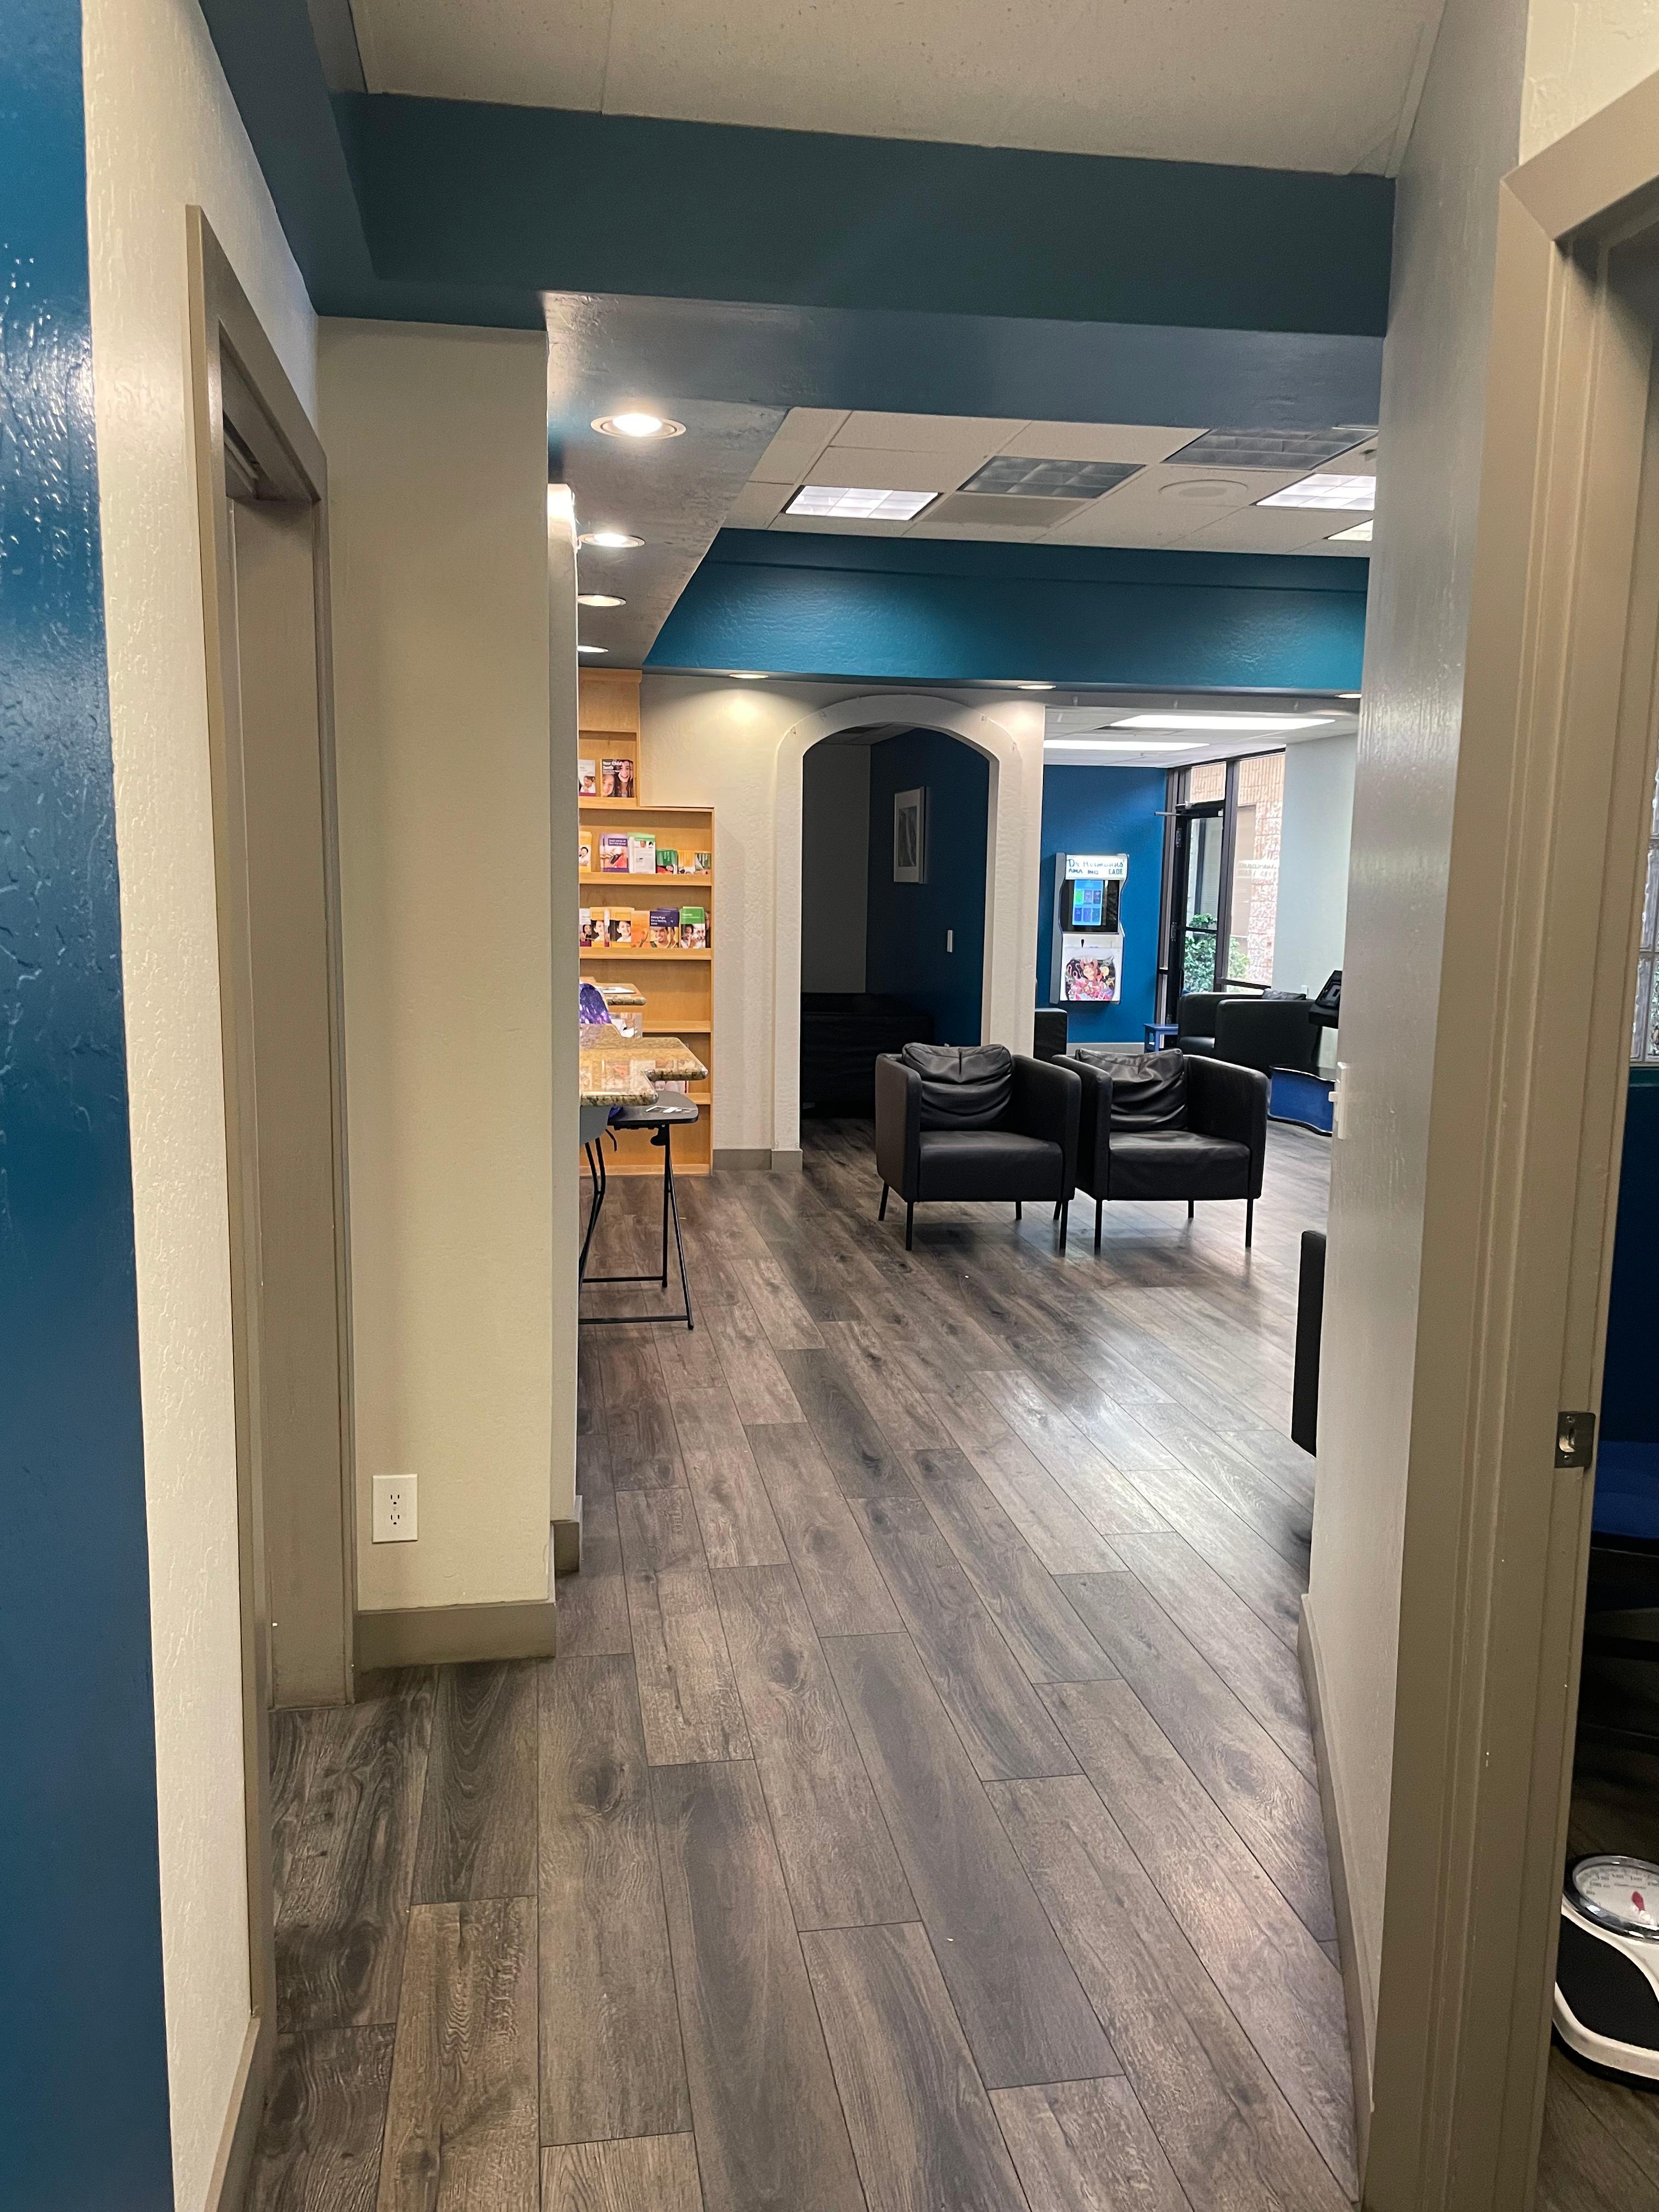 Waiting Room and Hallway at North Phoenix Pediatric Dentistry